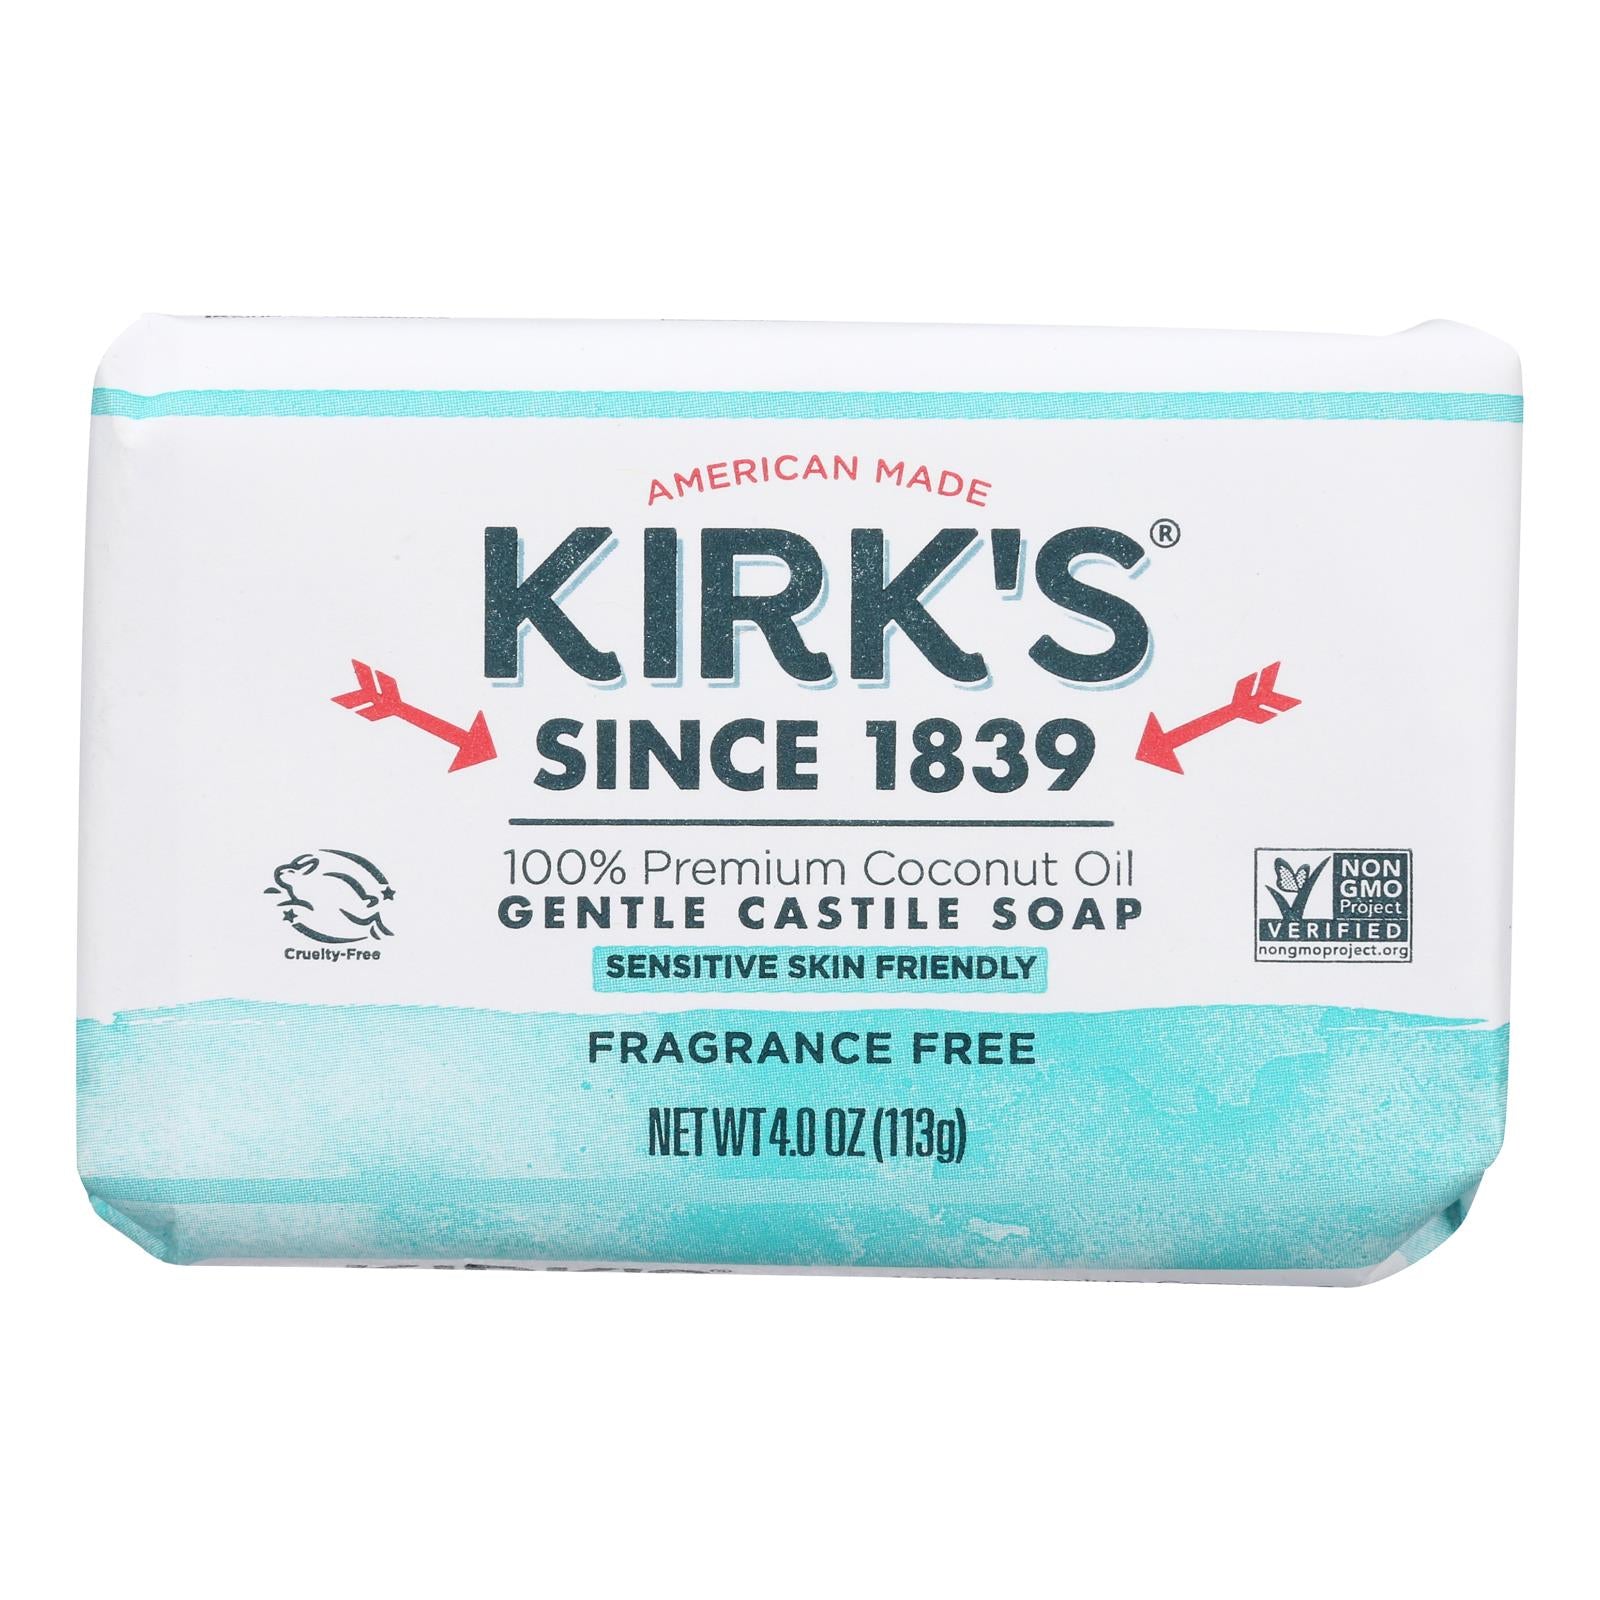 Kirk's Natural Original Coco Castile Soap Fragrance Free - 4 Oz